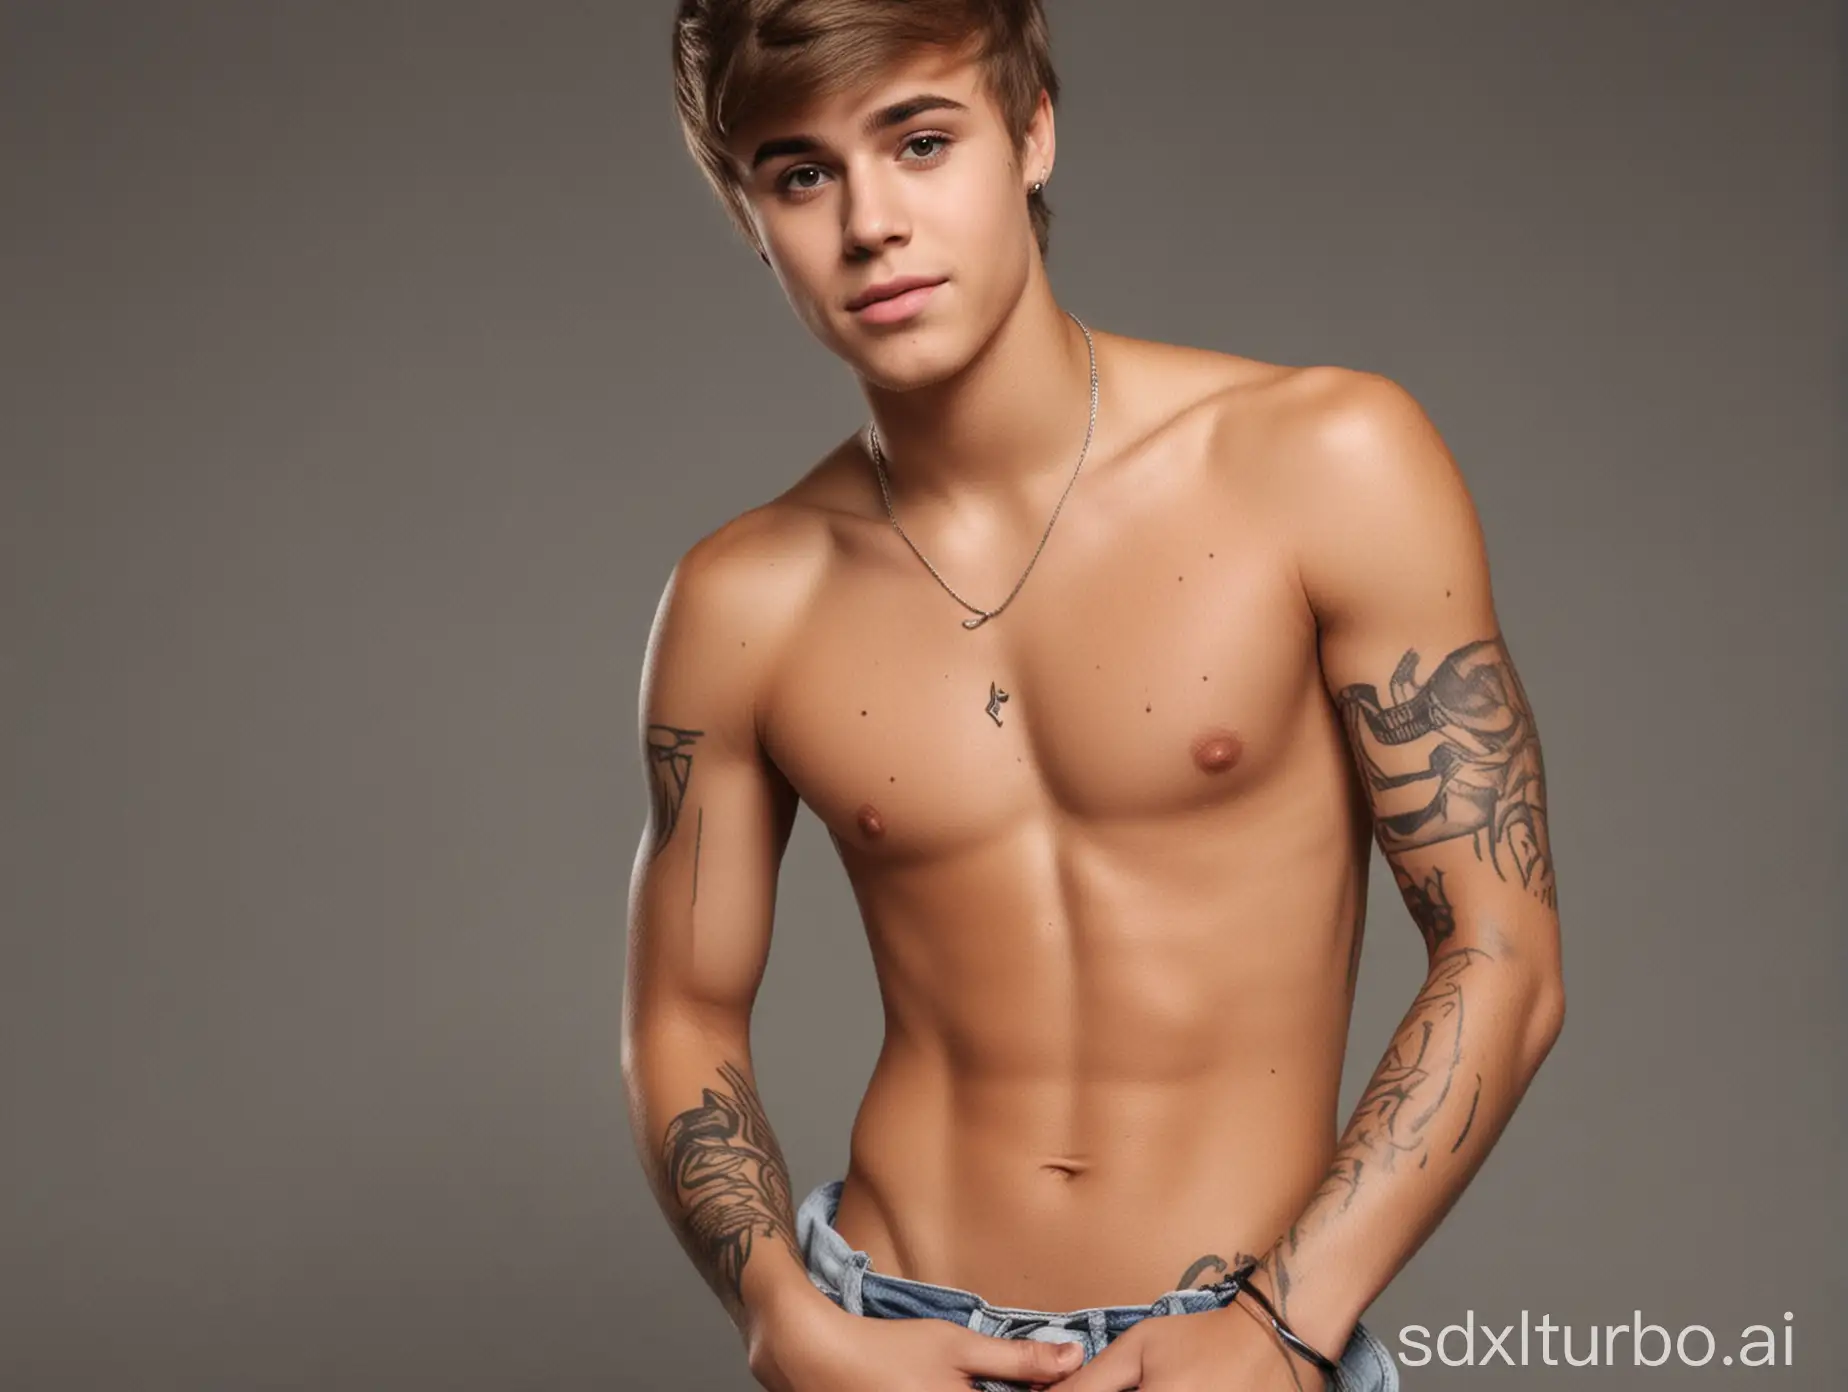 Realismo crie o cantor Justin Bieber sem camisa e musculoso